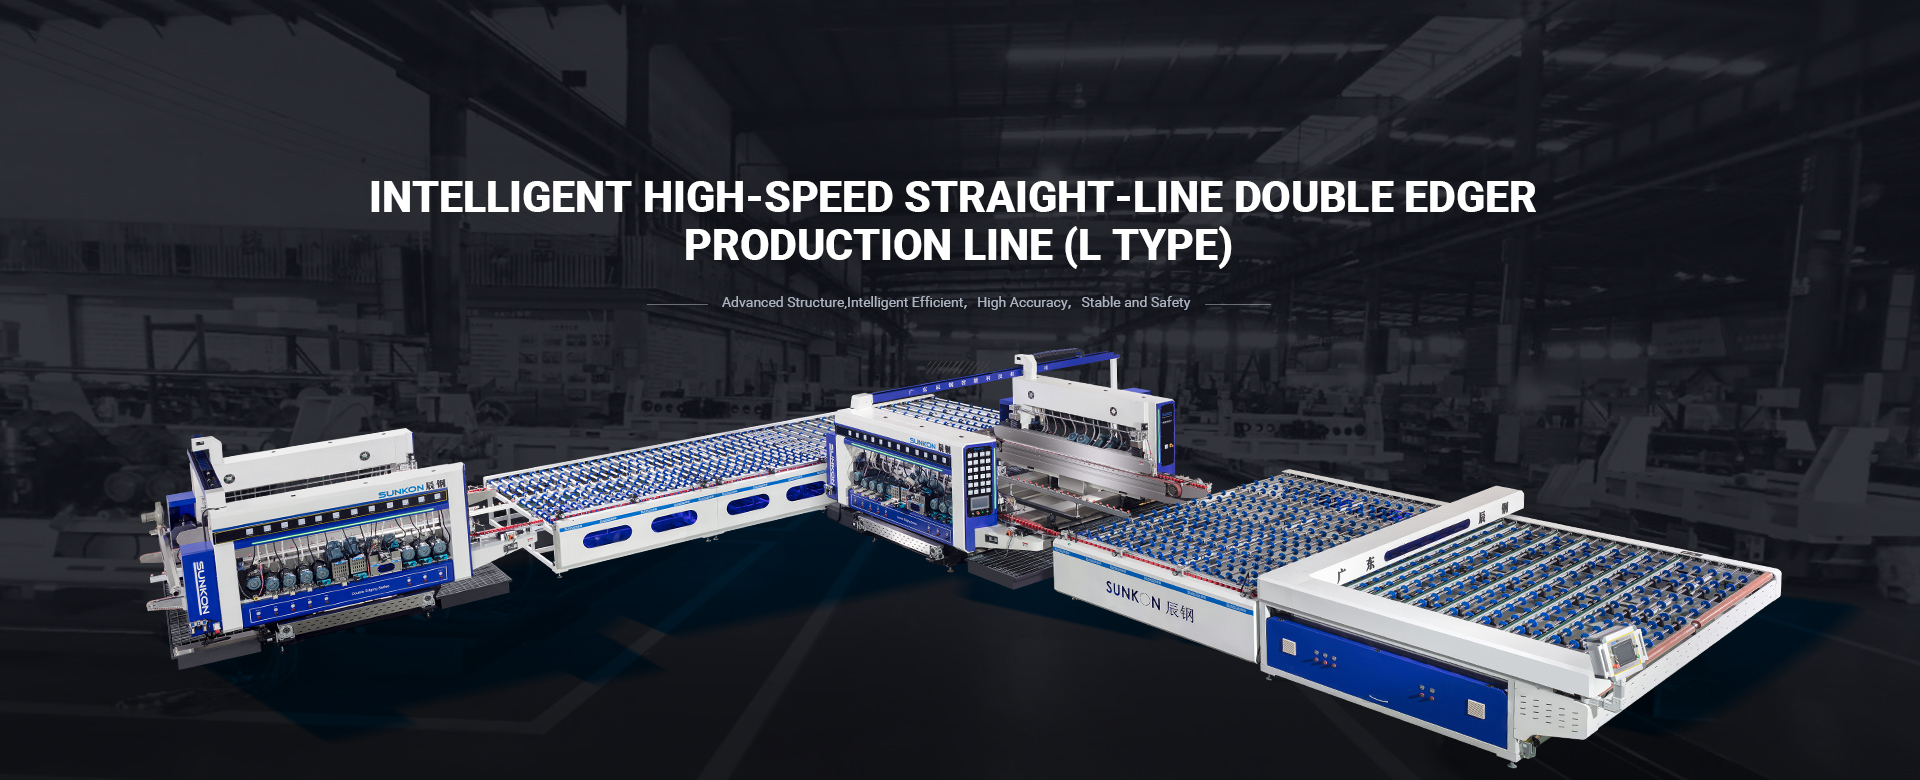 I-Intelligent High-Speed ​​High-Sight-Line Double Edger Production Line(Uhlobo L)